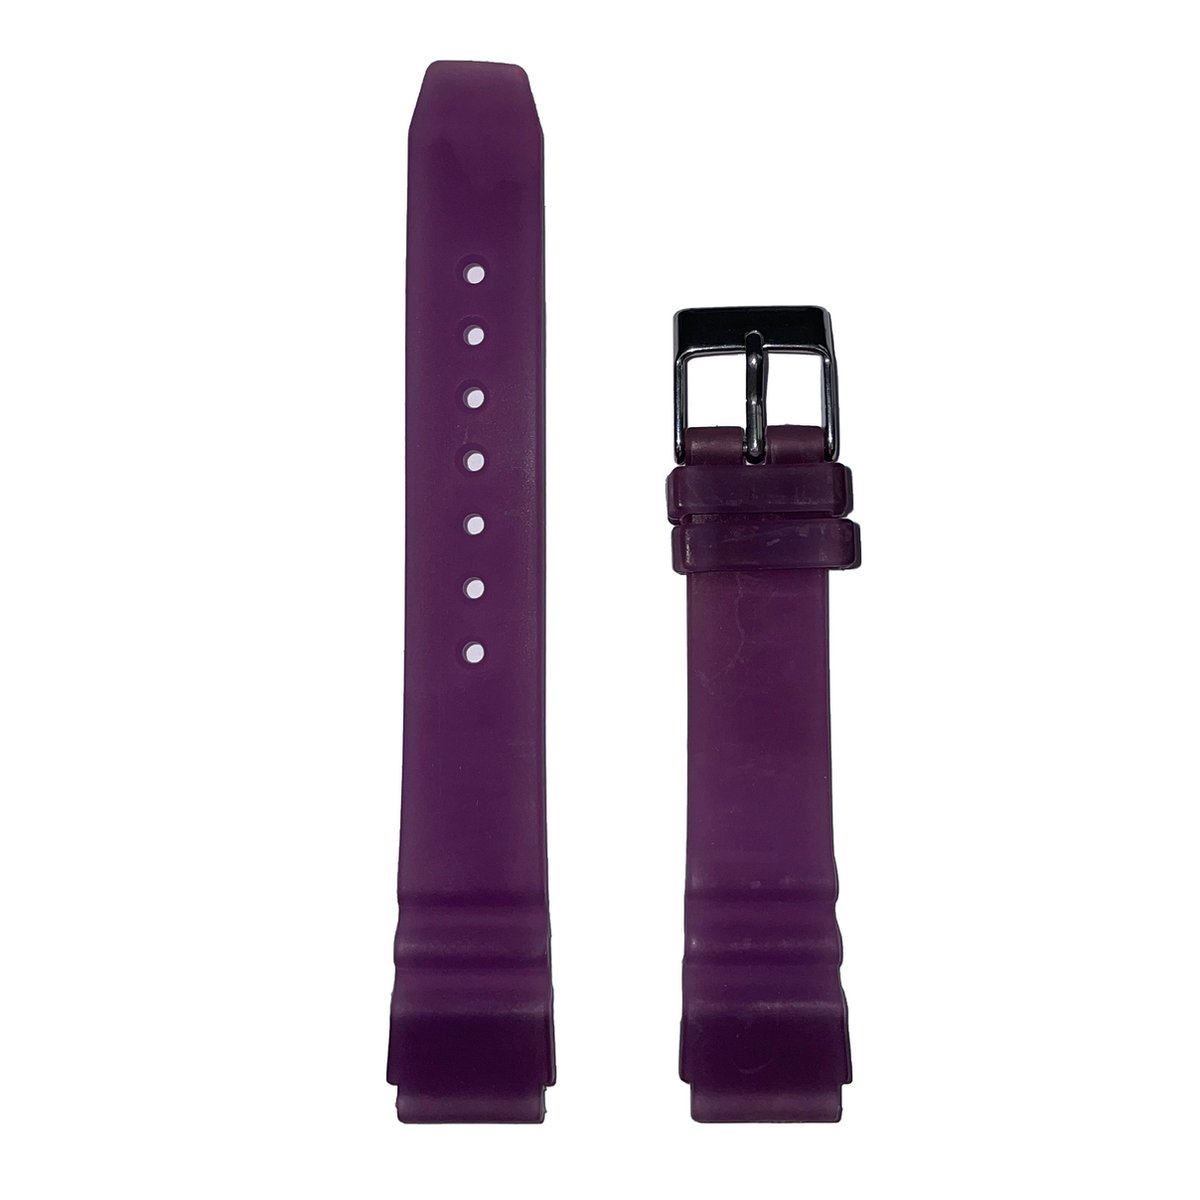 Horlogeband - 16mm - Paars - Transparante silicone band - Roestvrijstalen gesp